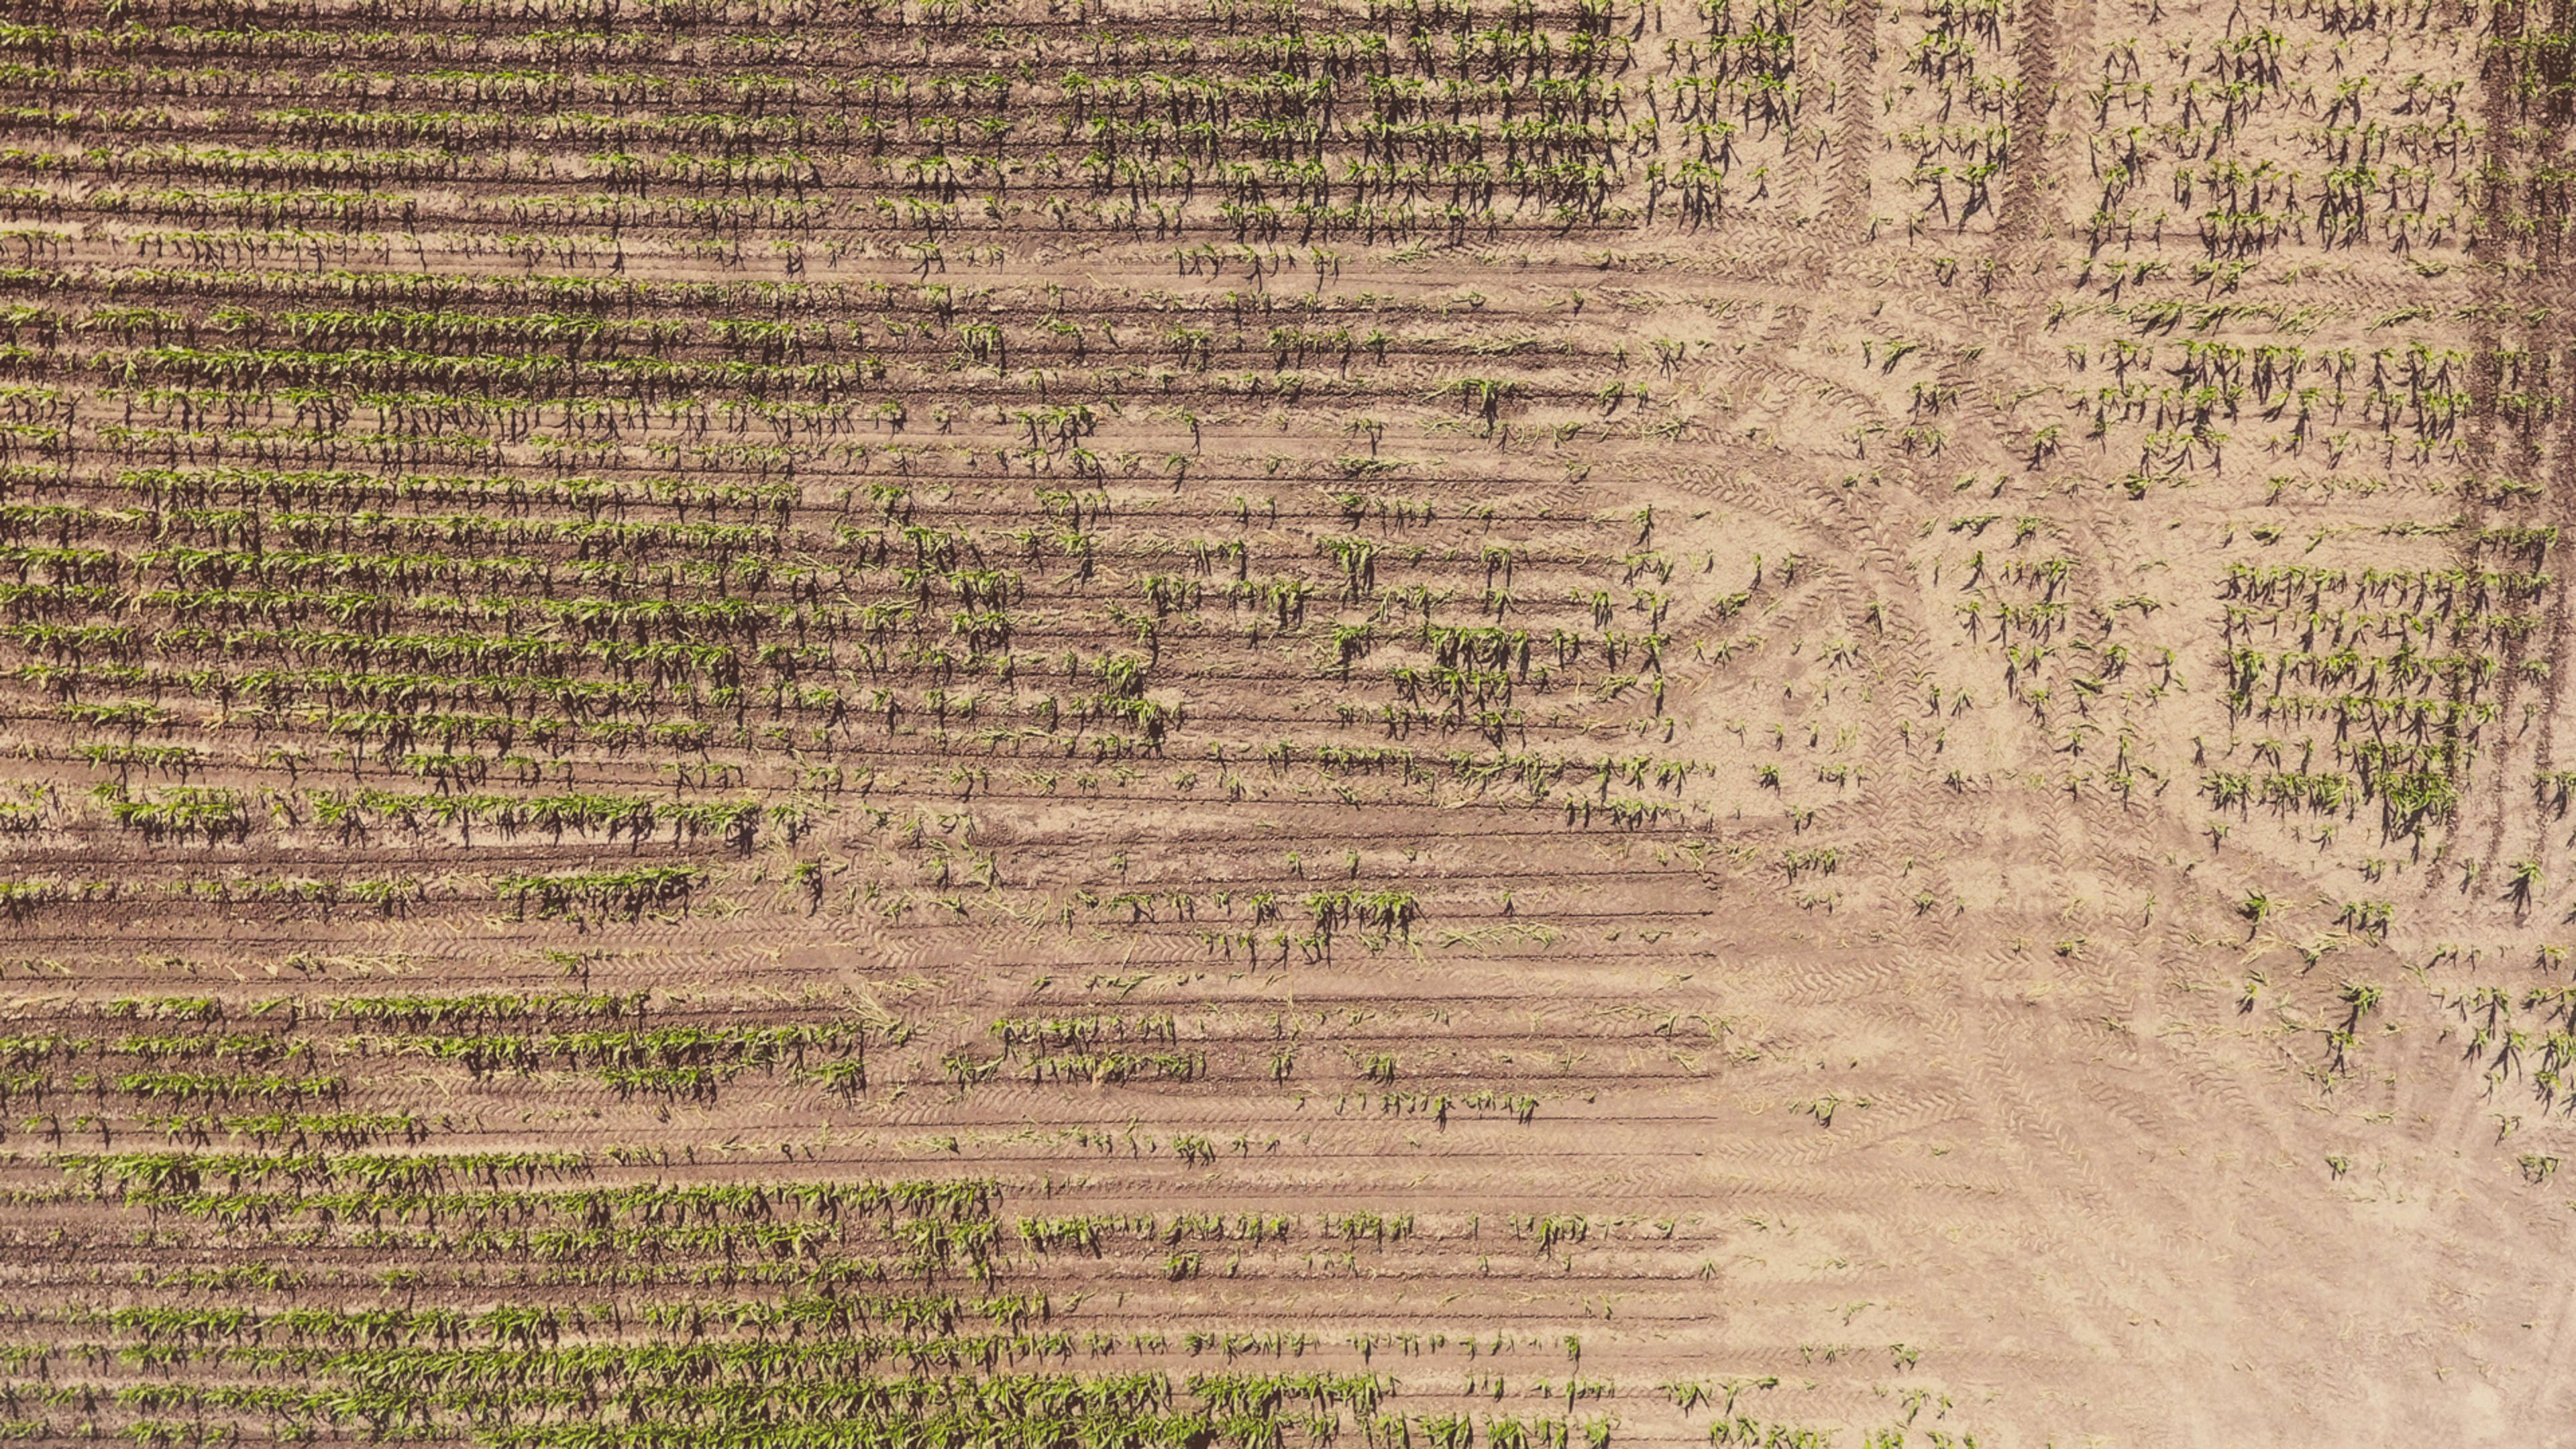 Lawsuit: Blame Monsanto for widespread Kansas crop losses